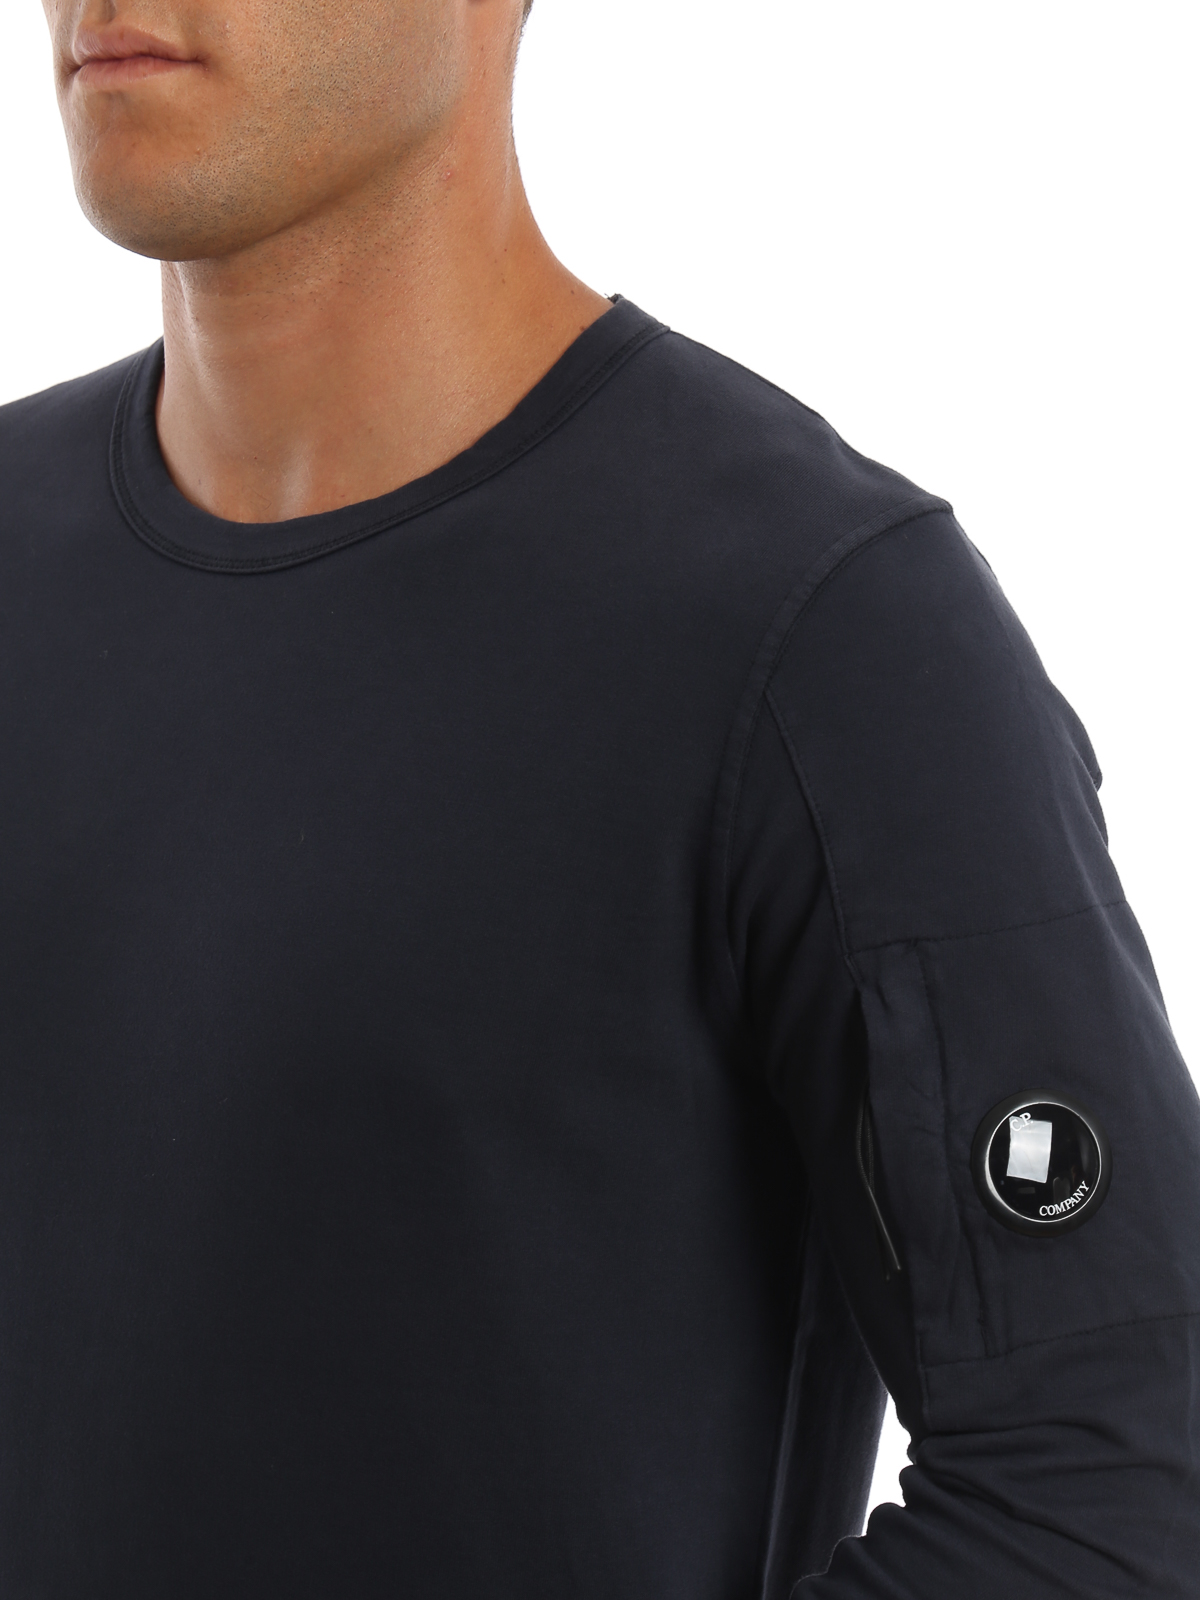 C.P. Company Cotton Sweatshirt in Black for Men